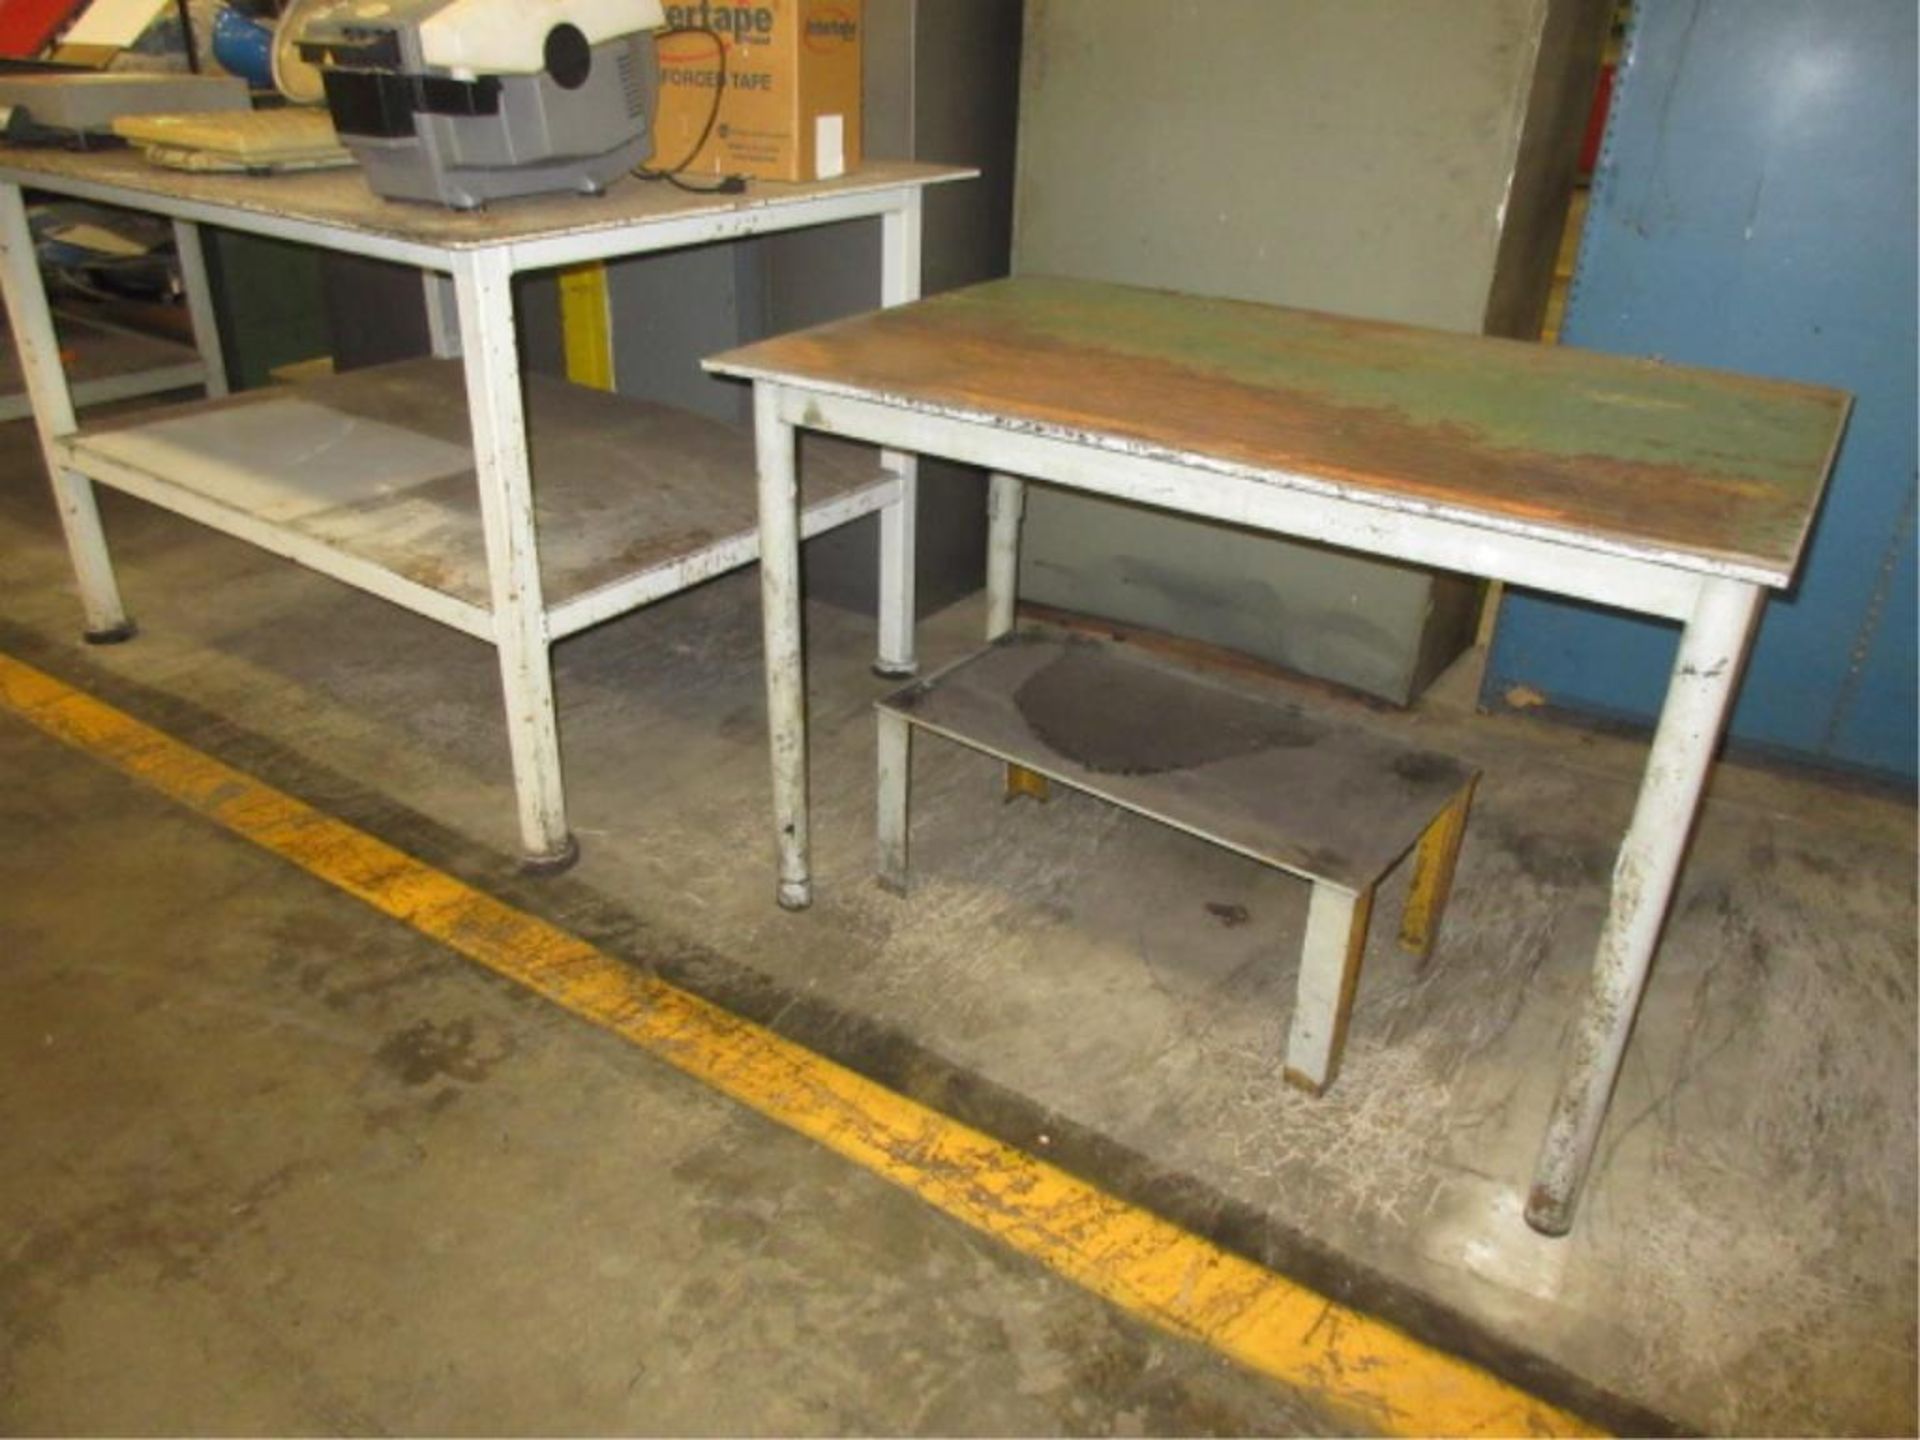 Shop Tables. Lot (7pcs) Heavy Duty Steel Shop Tables. HIT# 2179043. Loc: main floor. Asset Located - Image 5 of 5